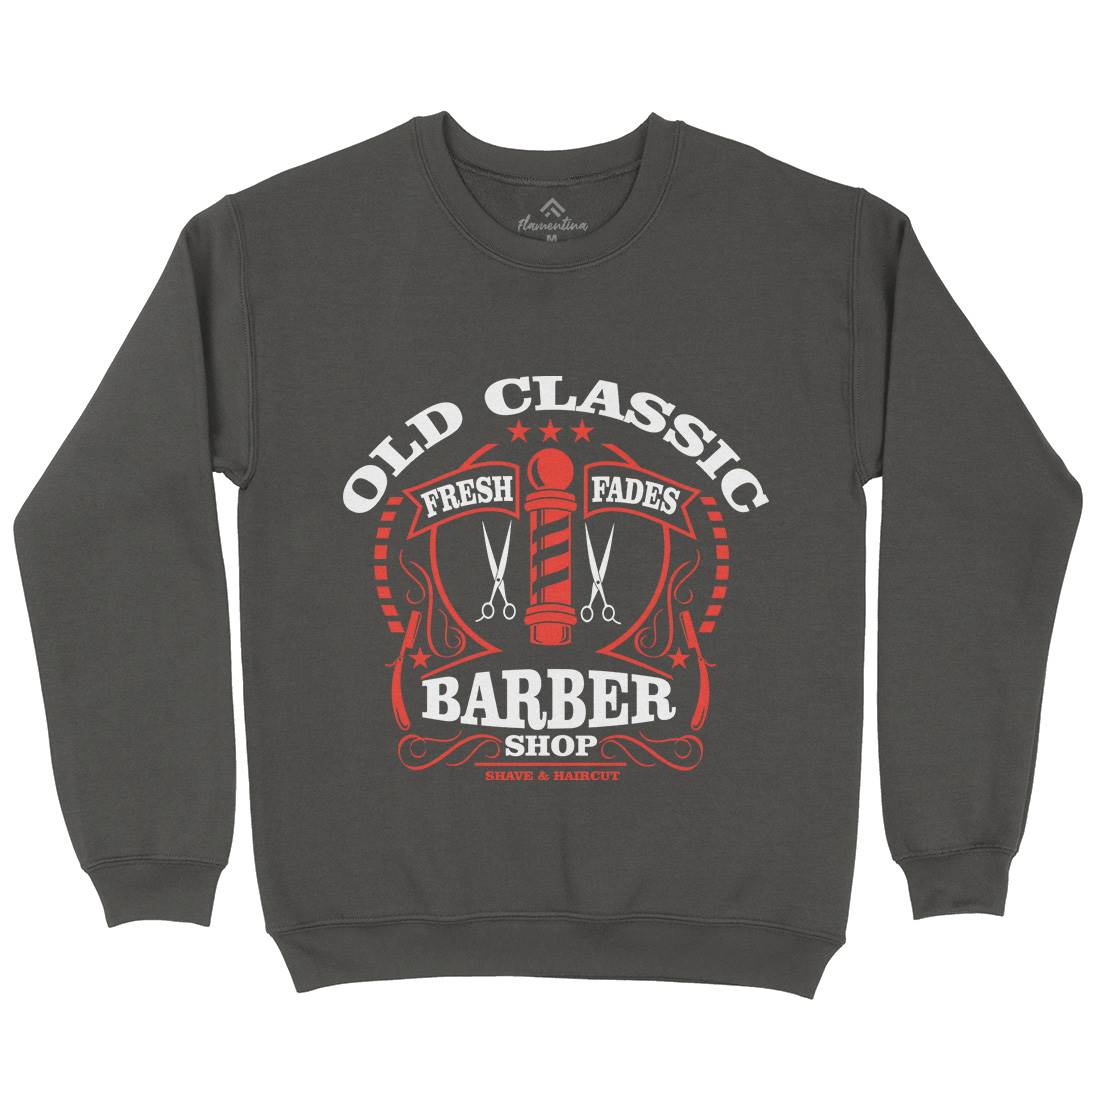 Old Classic Kids Crew Neck Sweatshirt Barber A099